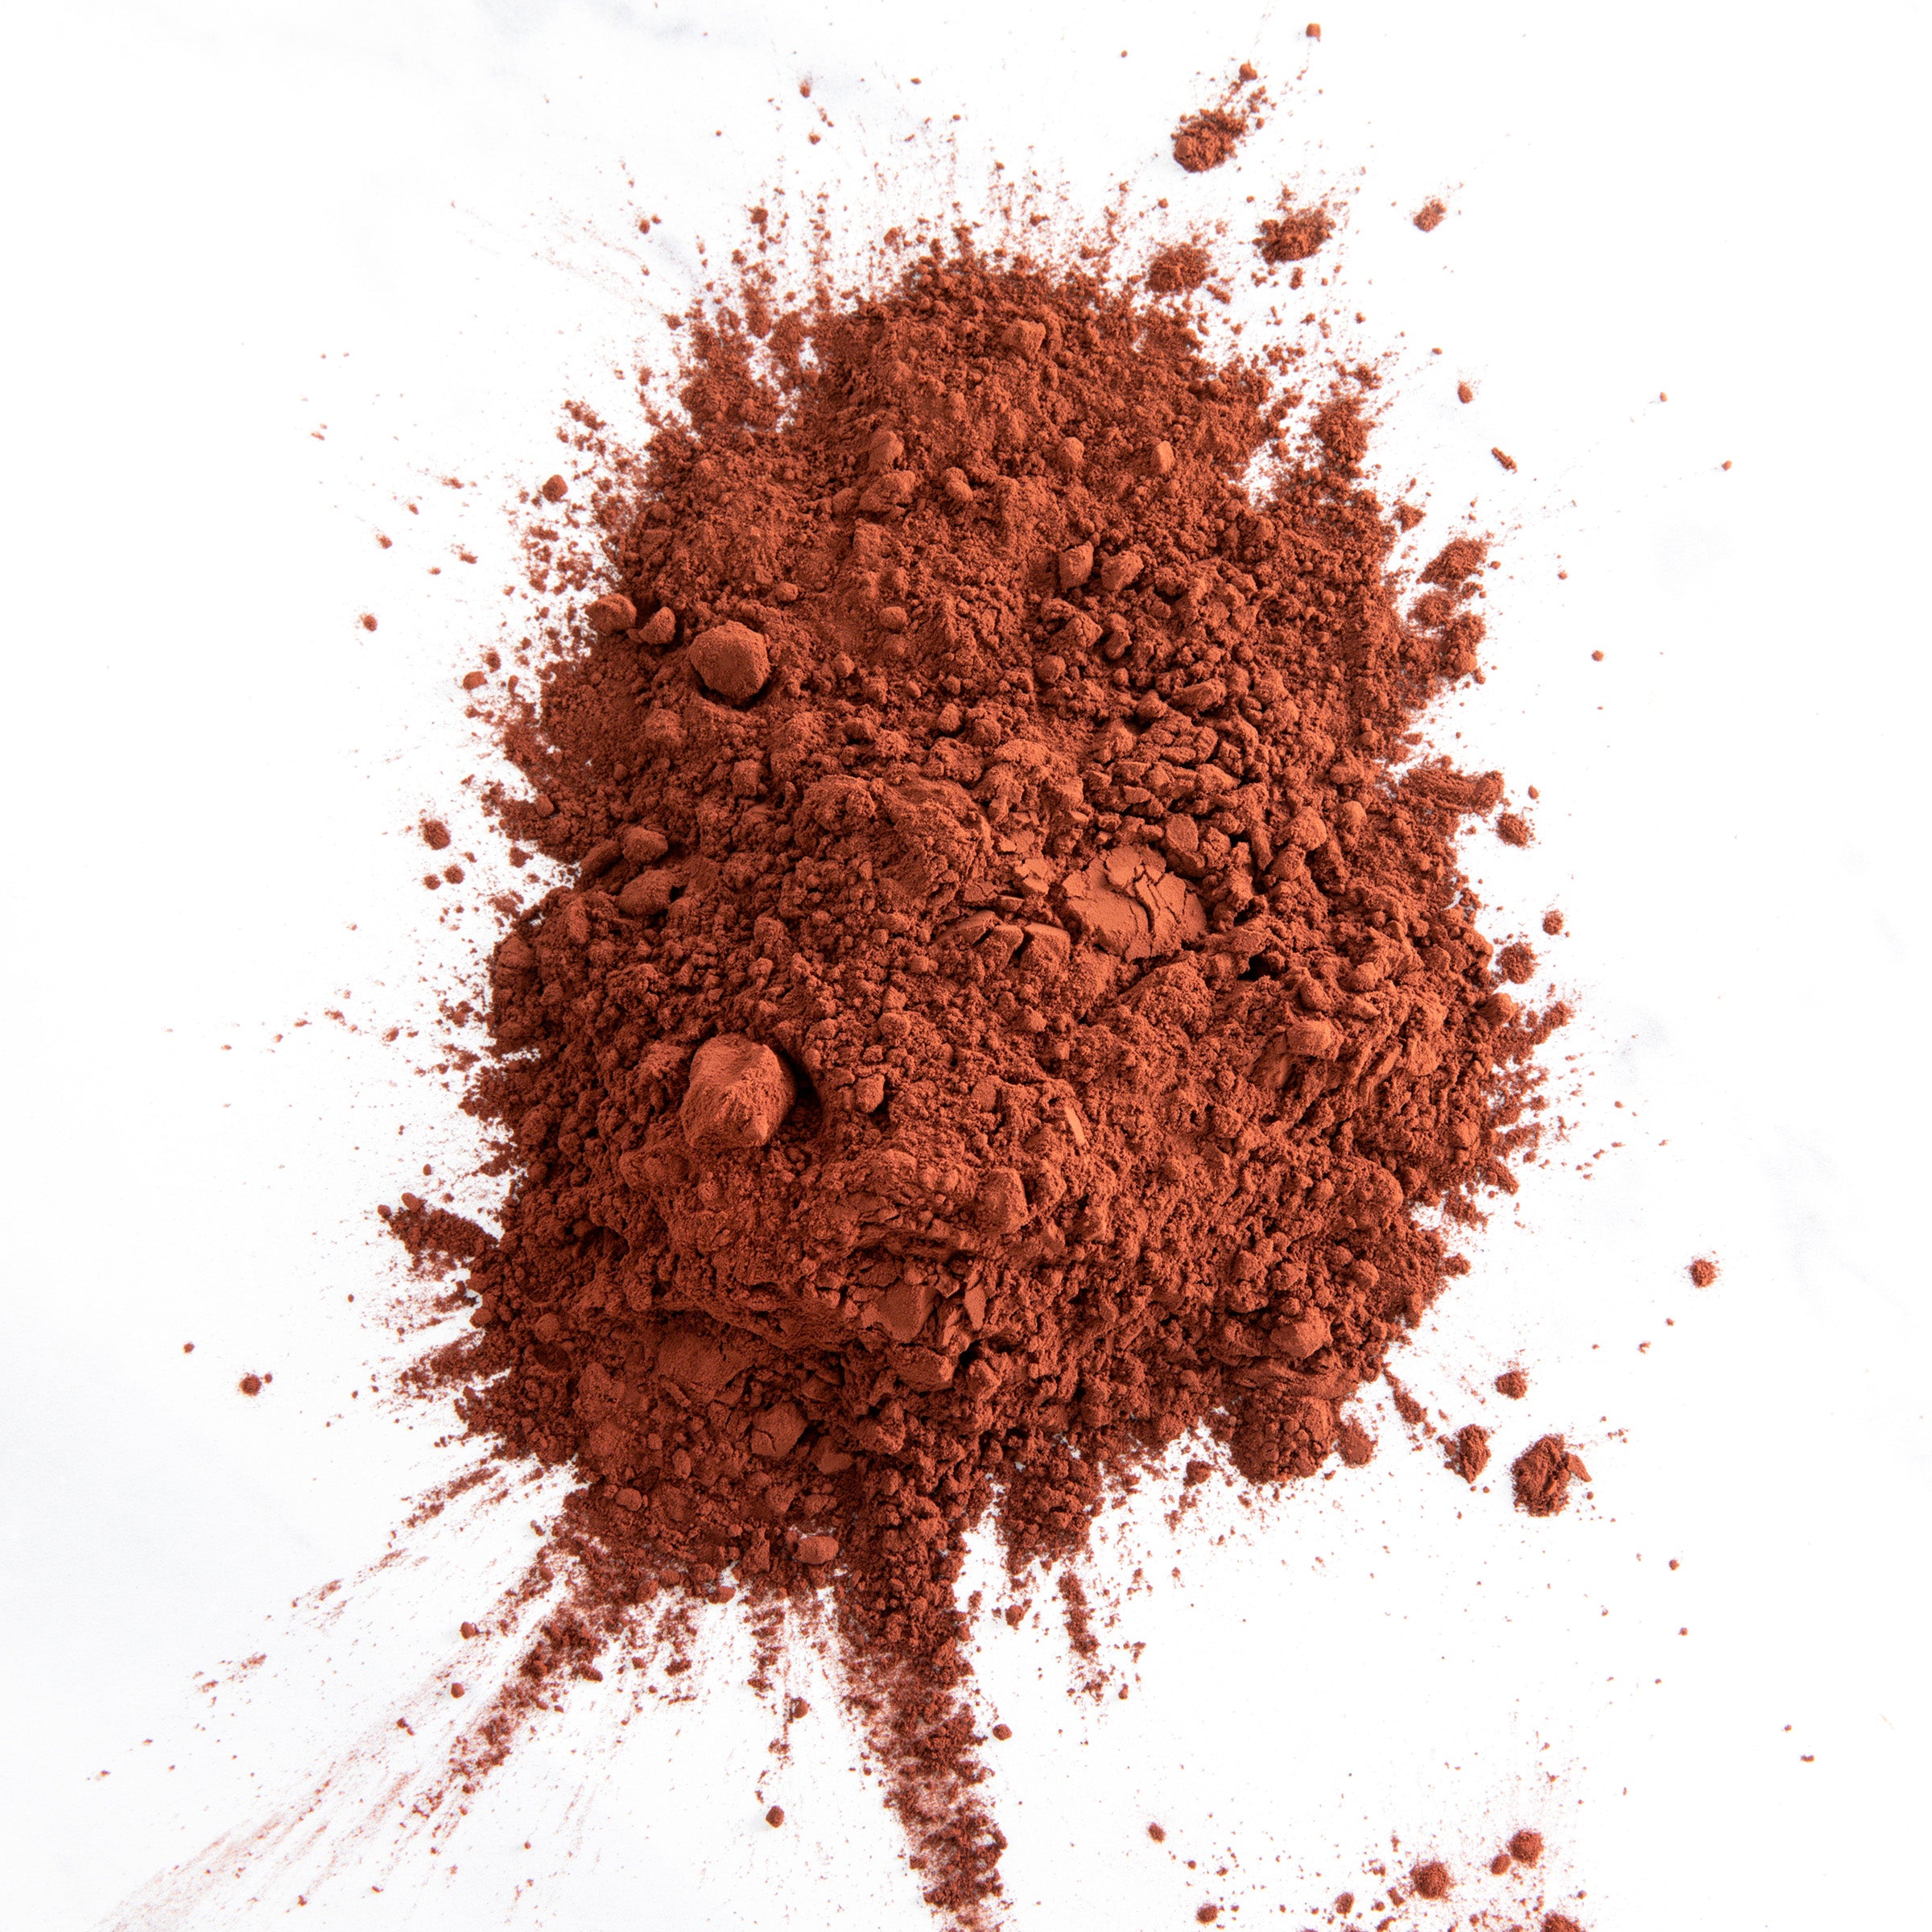 igourmet_3978_Valrhona_Pure Cocoa Powder_Chocolate Specialties